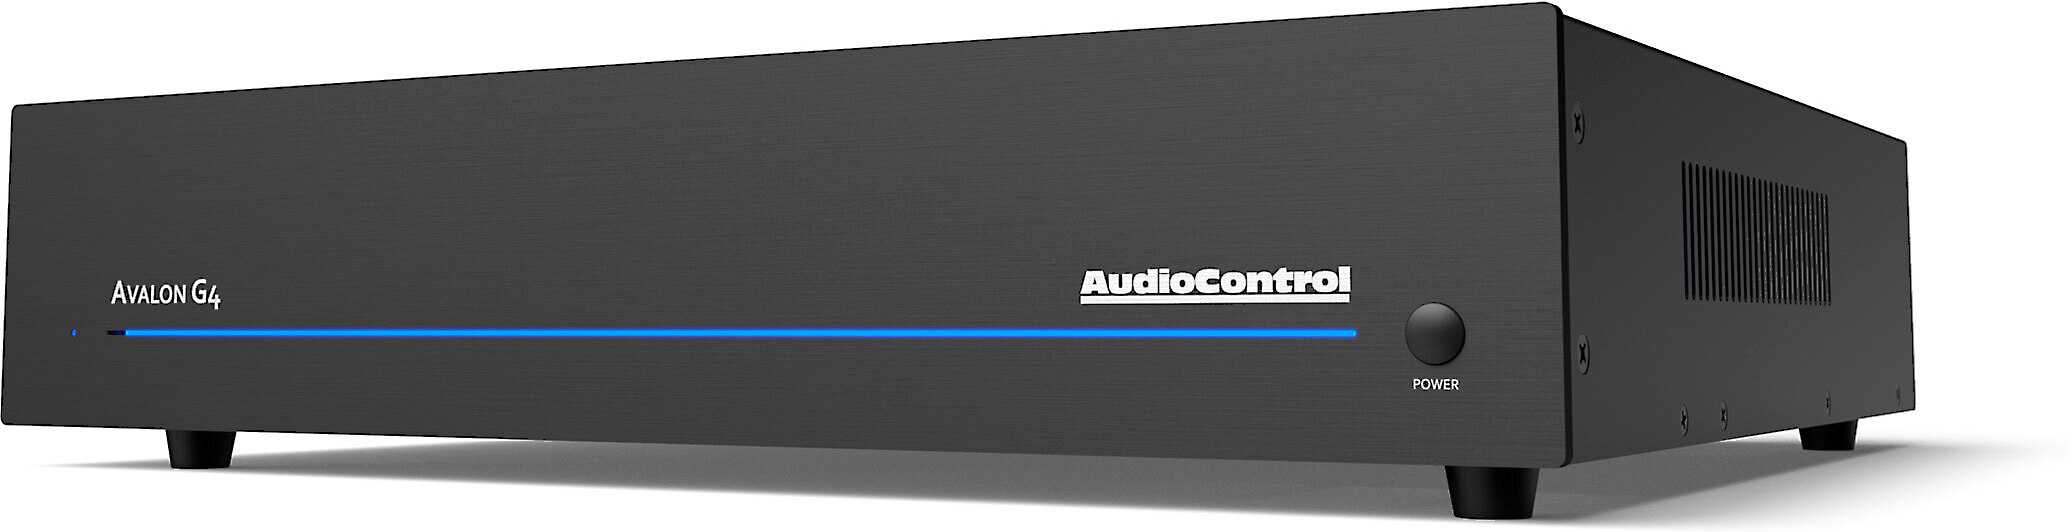 Customer Reviews: AudioControl Avalon G4 4-channel power amplifier at  Crutchfield